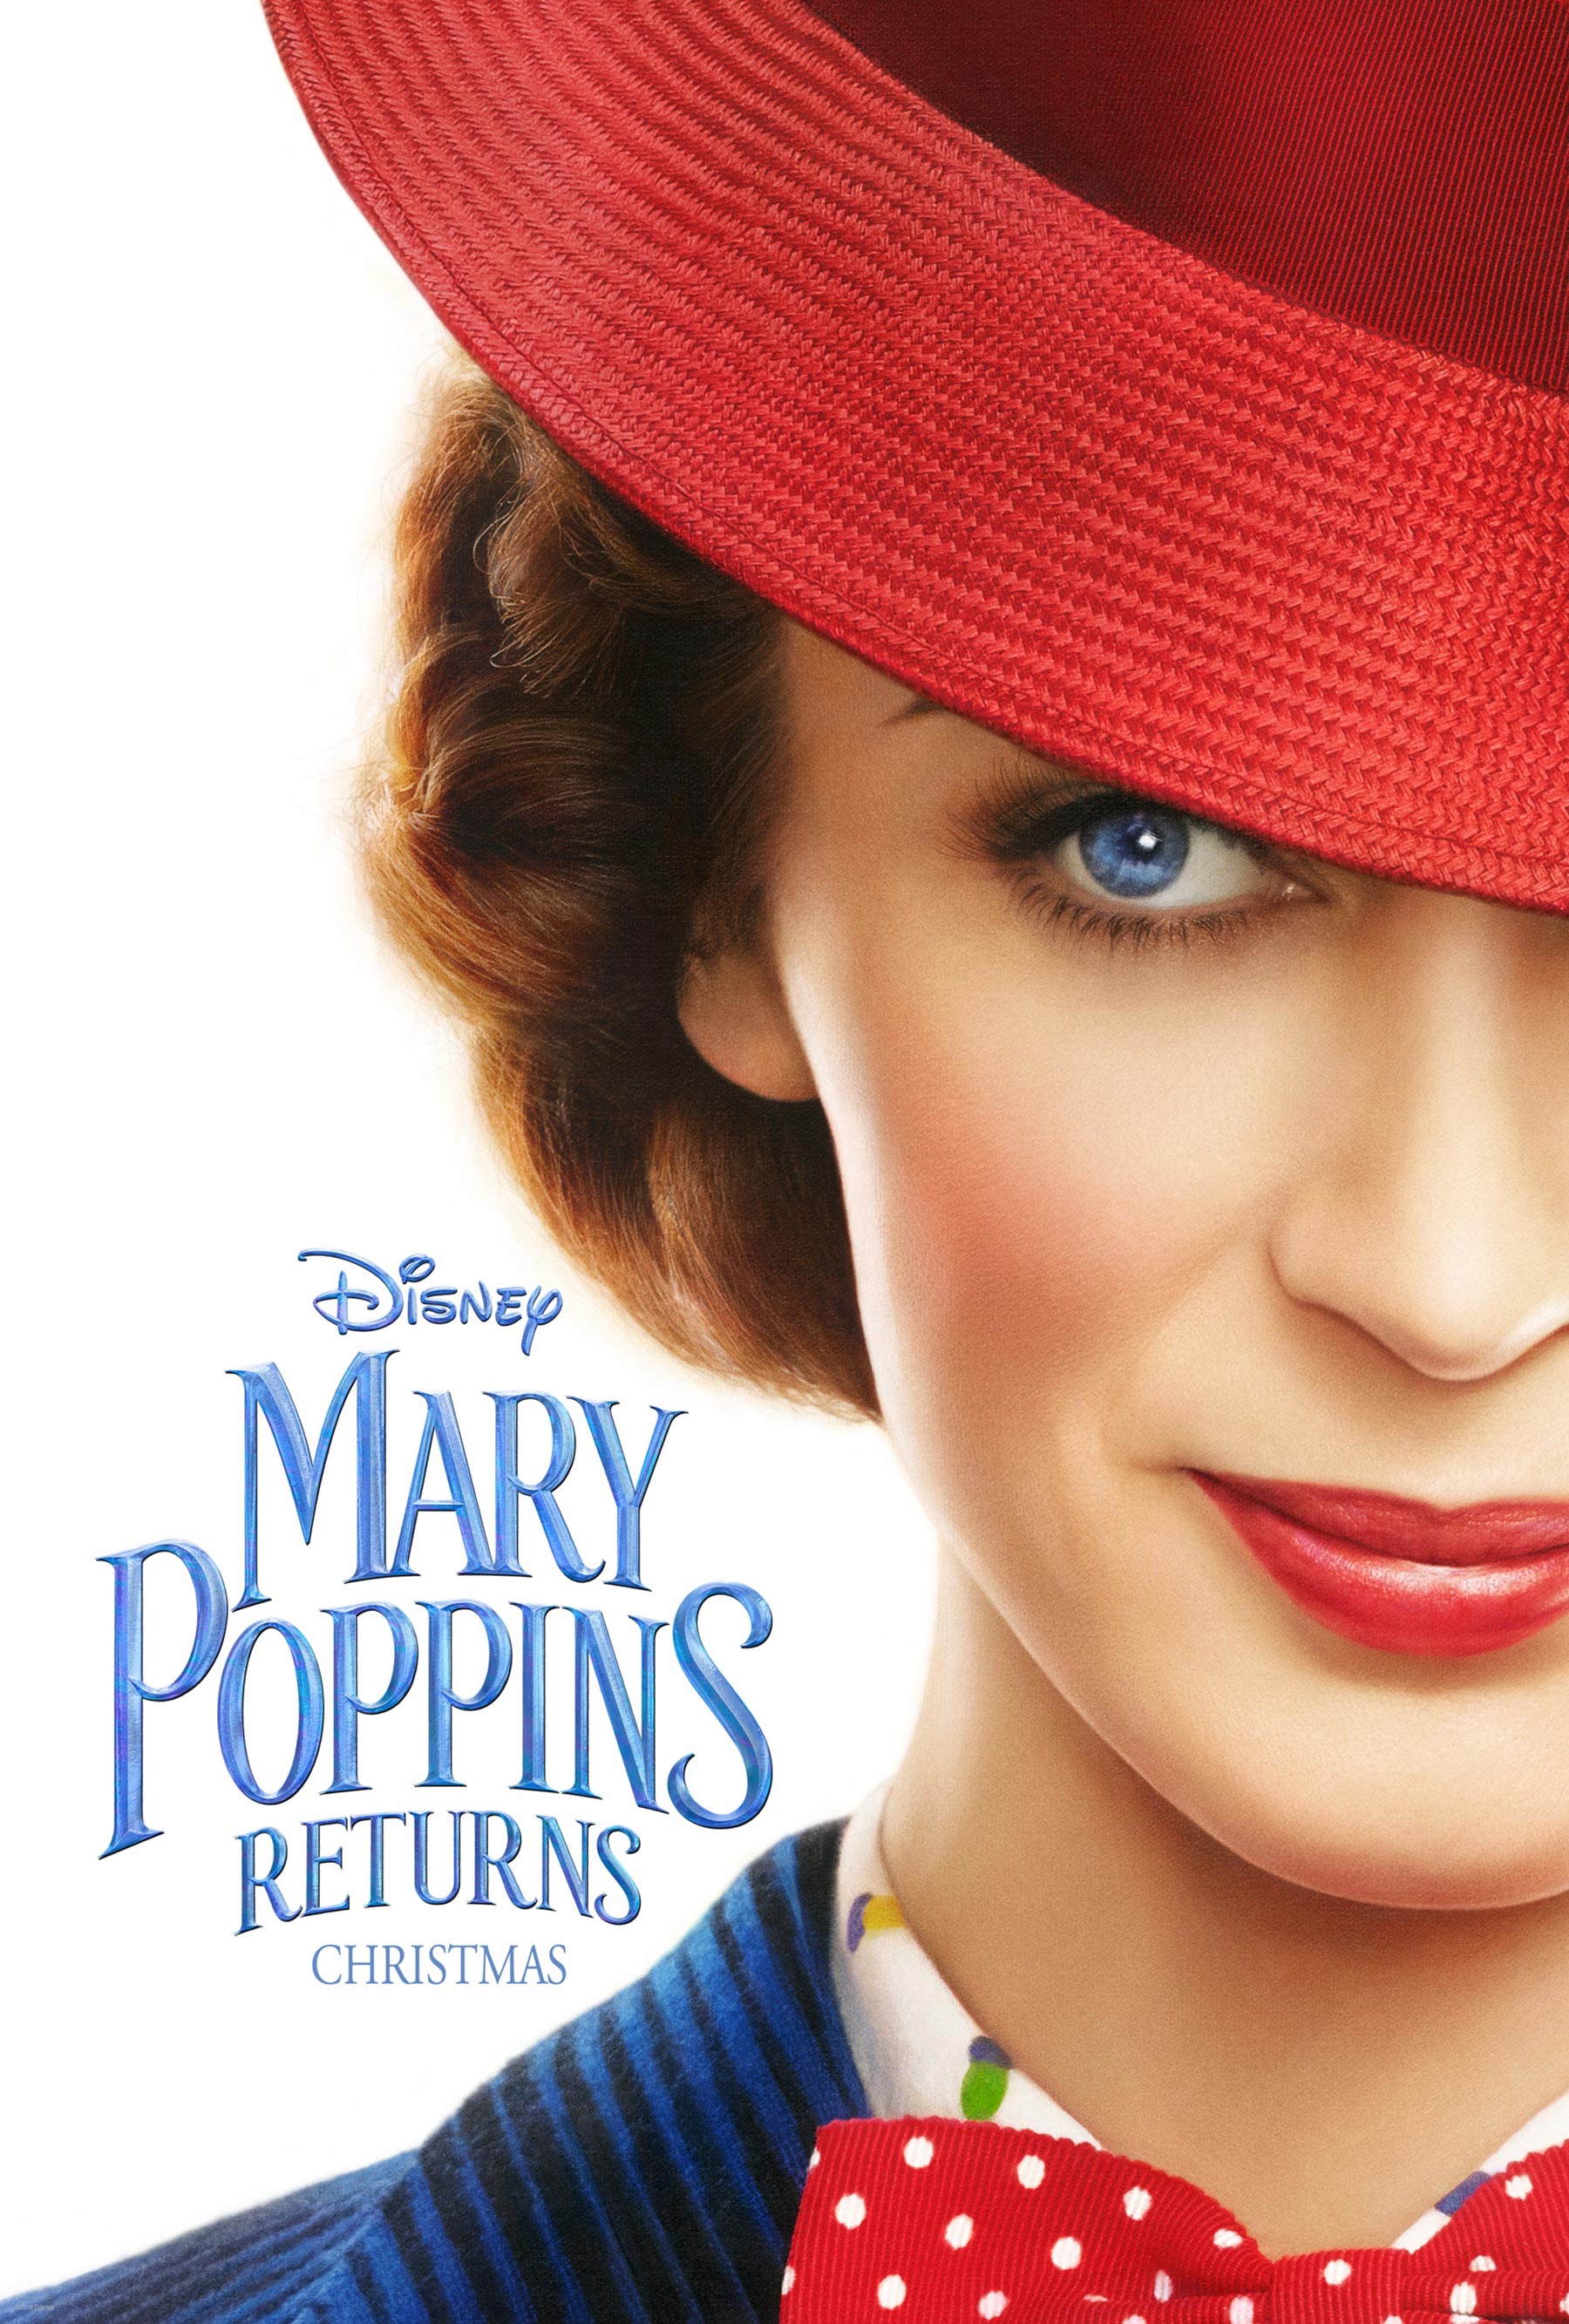 Oficiálny teaser plagát na film Mary Poppins Returns